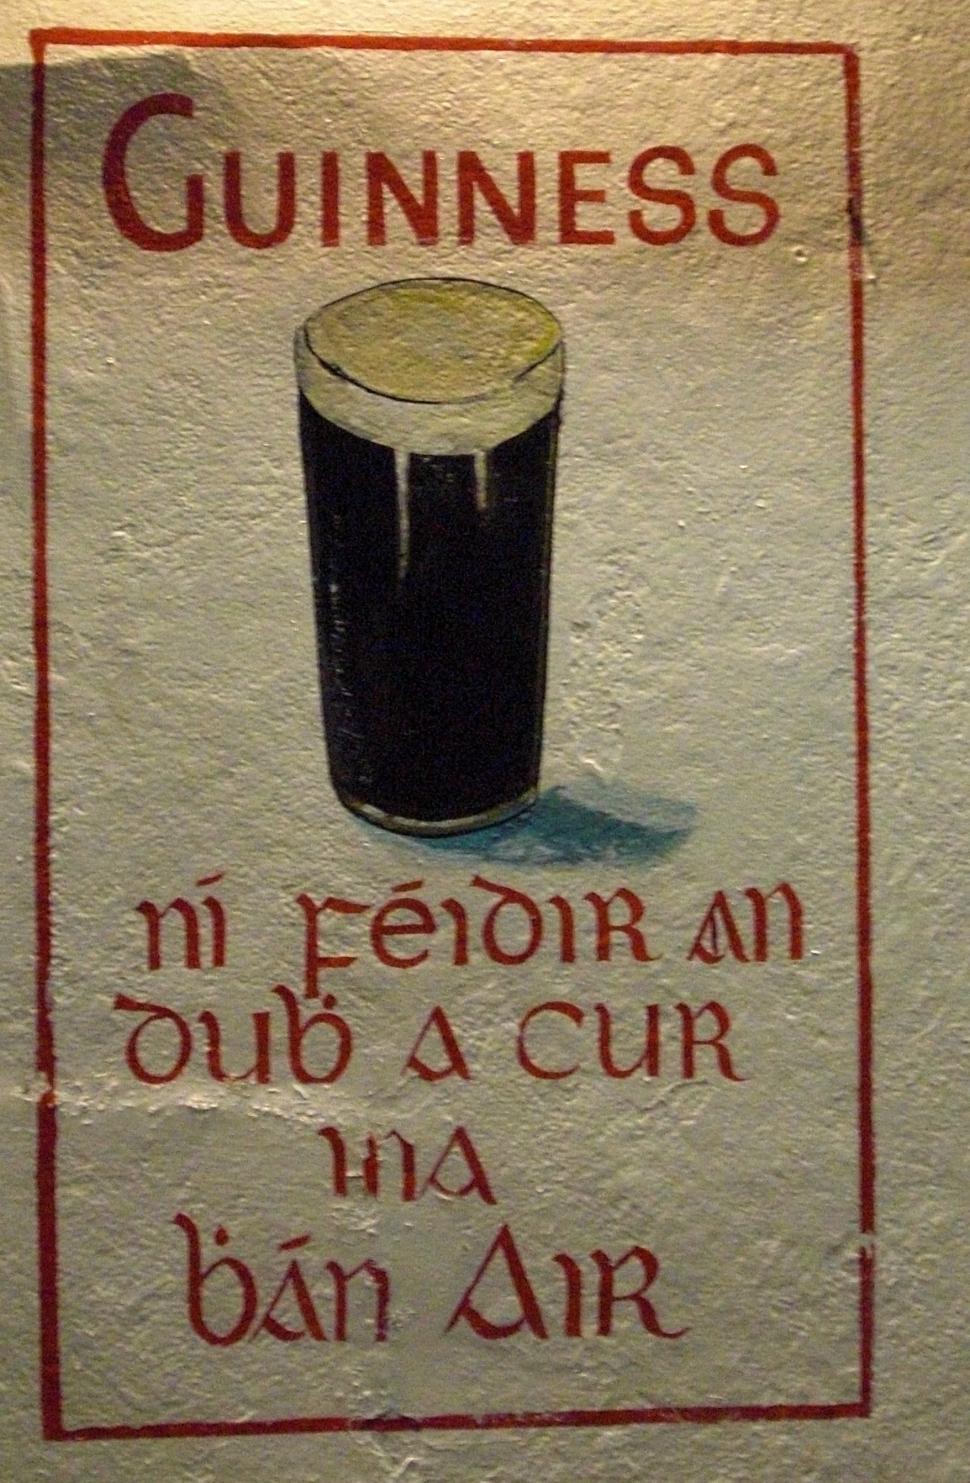 Free Image of Guinness - Gaelic Advertisement 